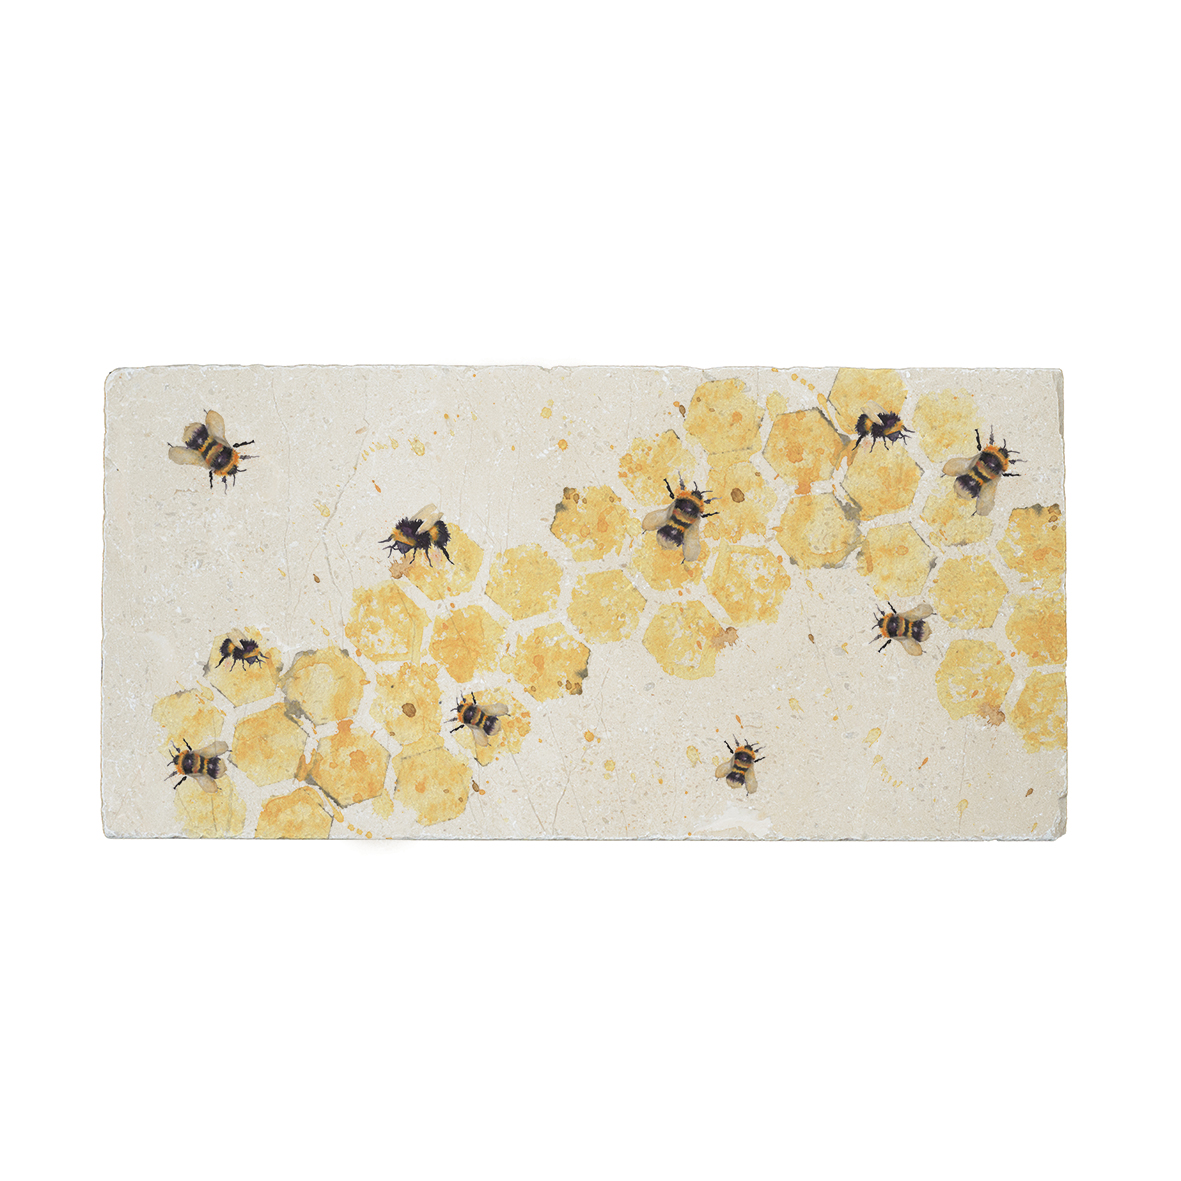 Marble cheese platter - Honeycomb Bees (rectangular)